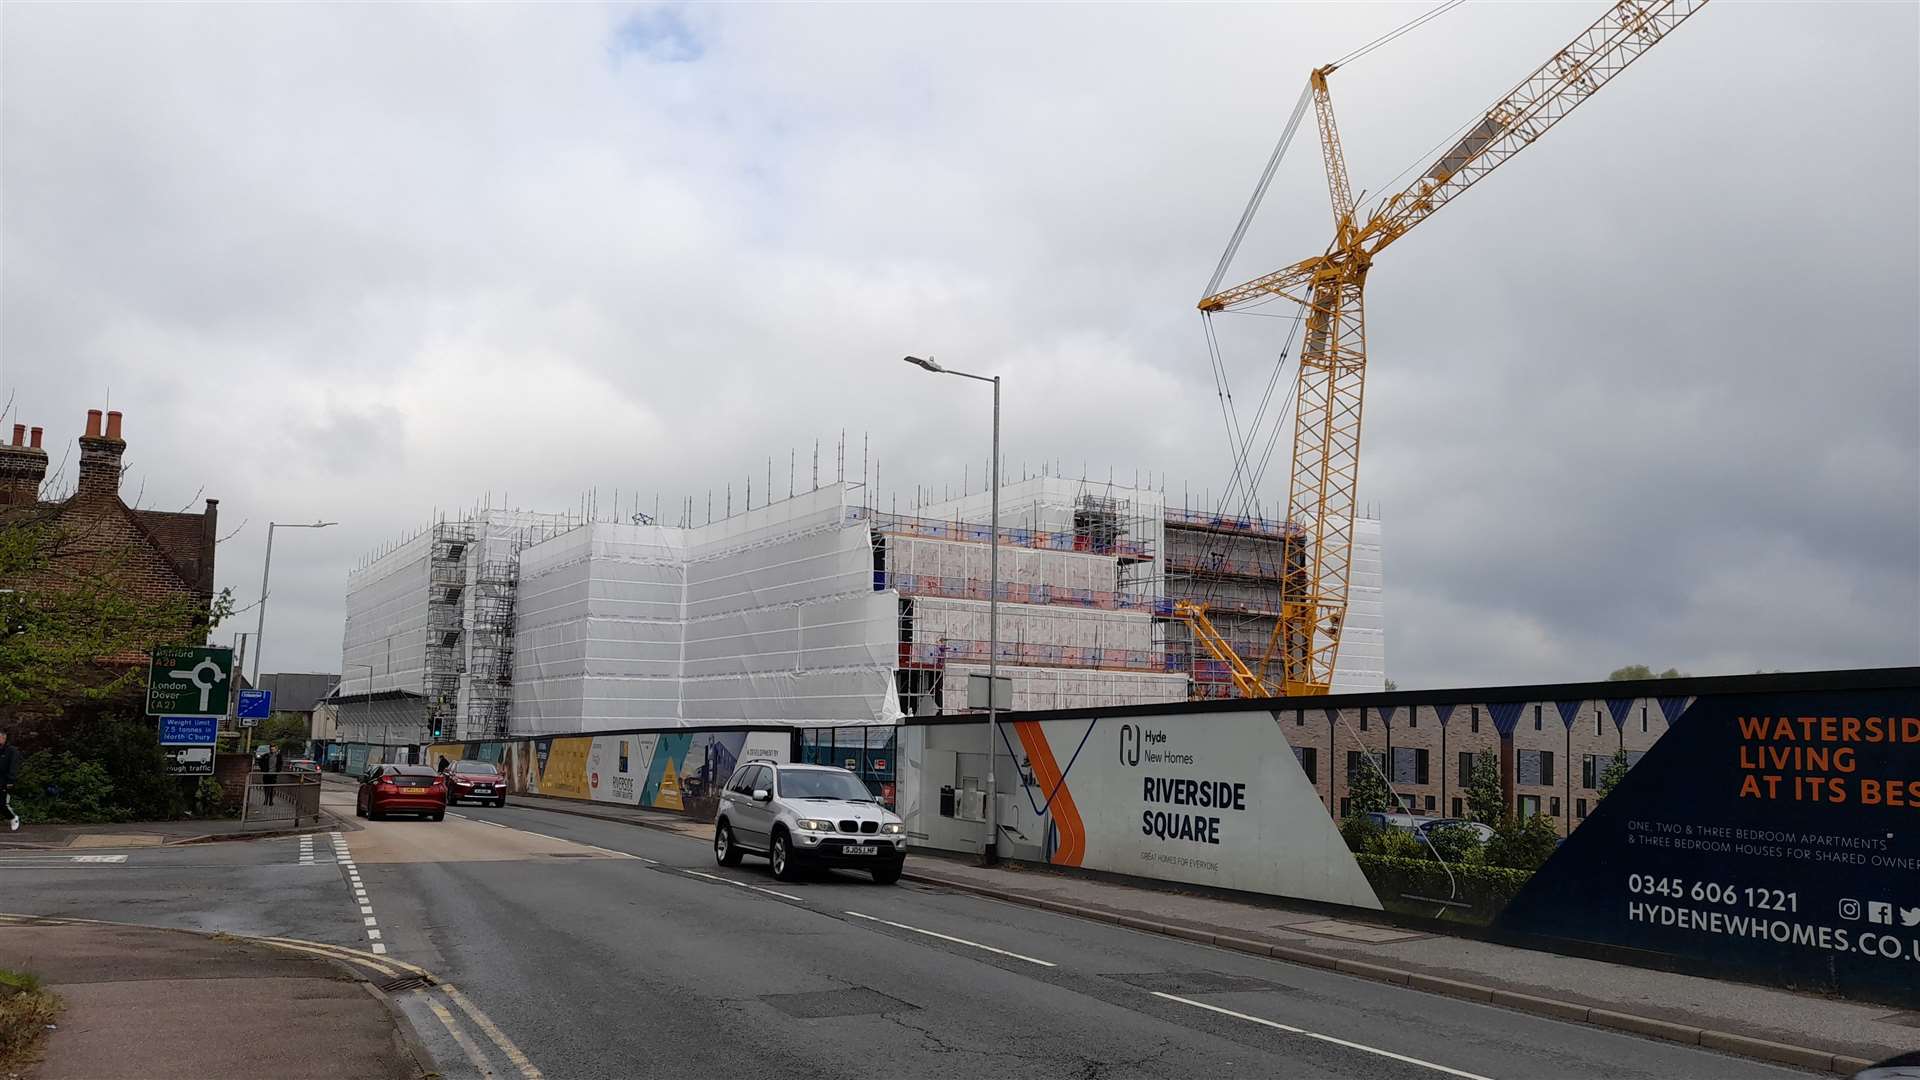 The Kingsmead development, as seen from Sturry Road, is taking shape